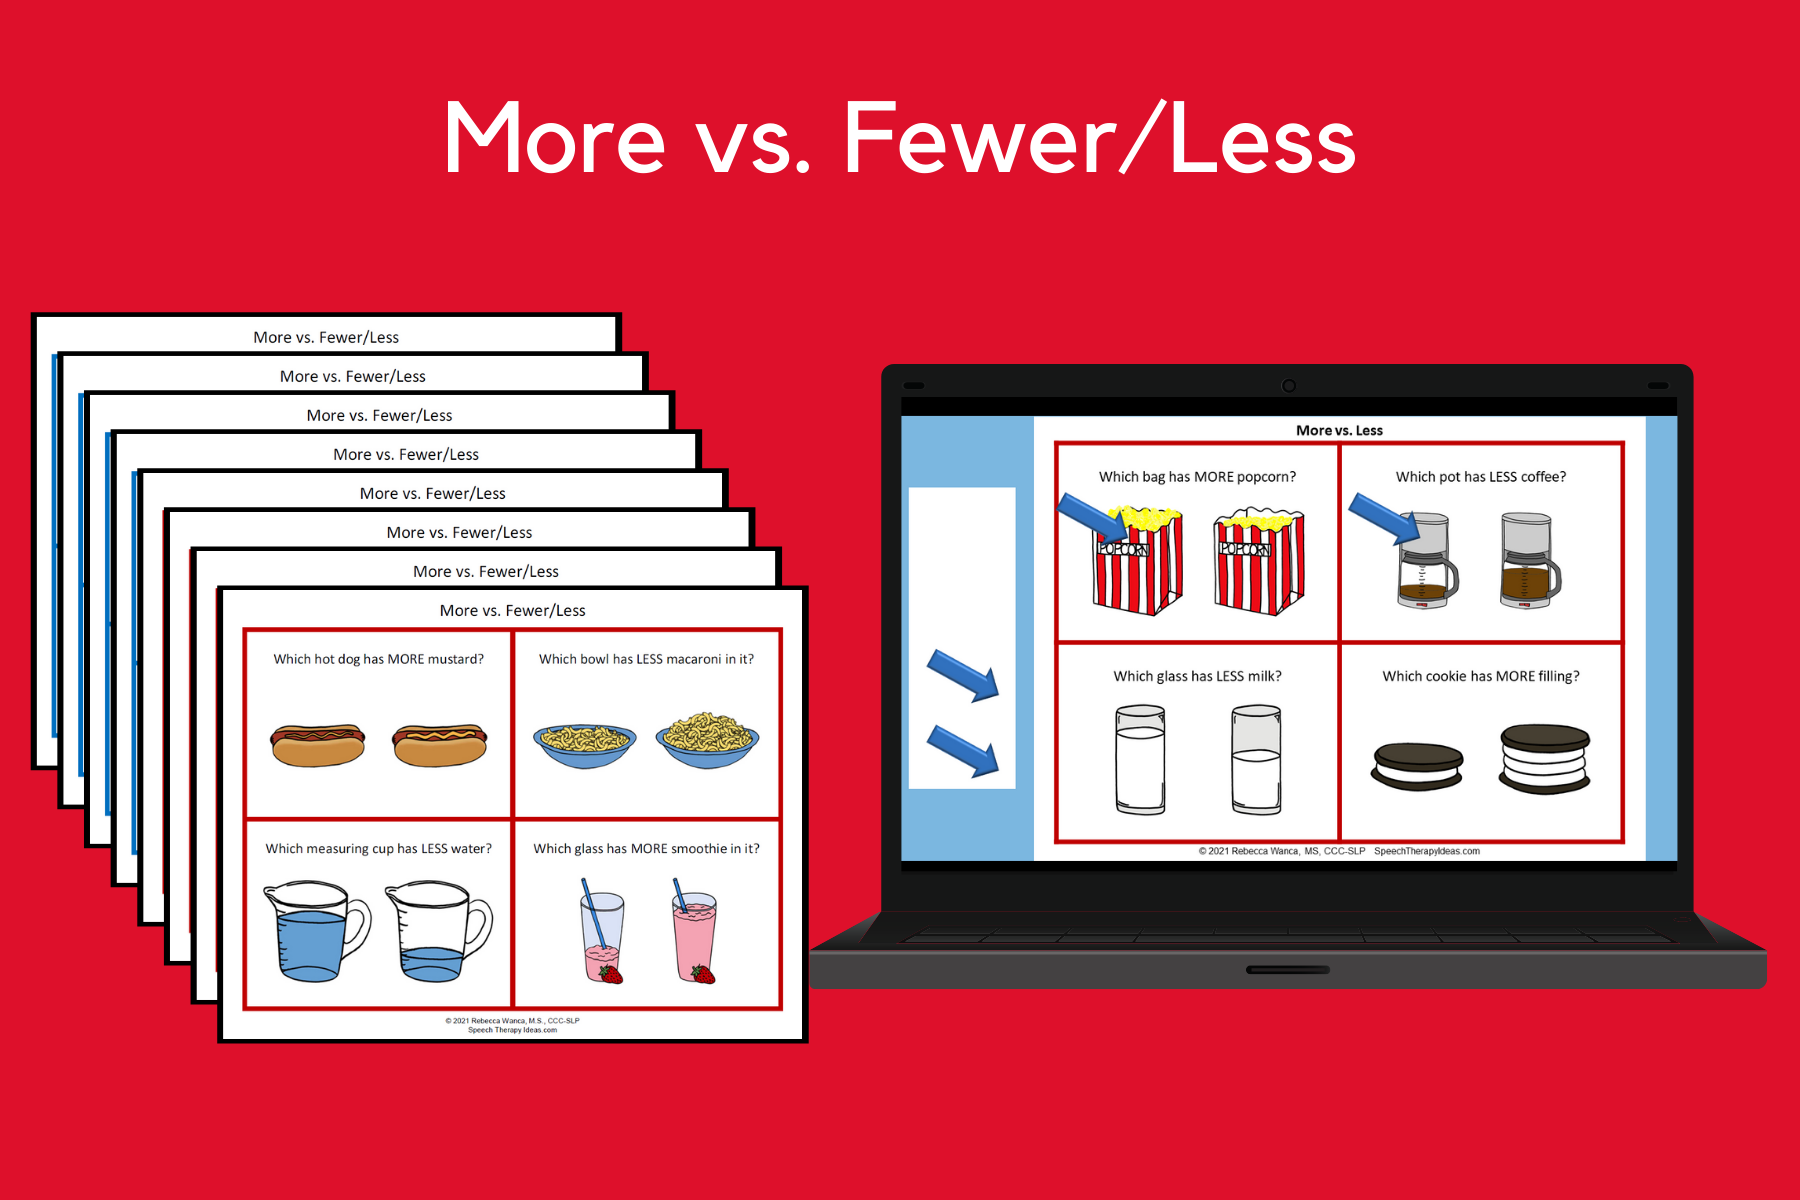 More vs. Fewer/Less